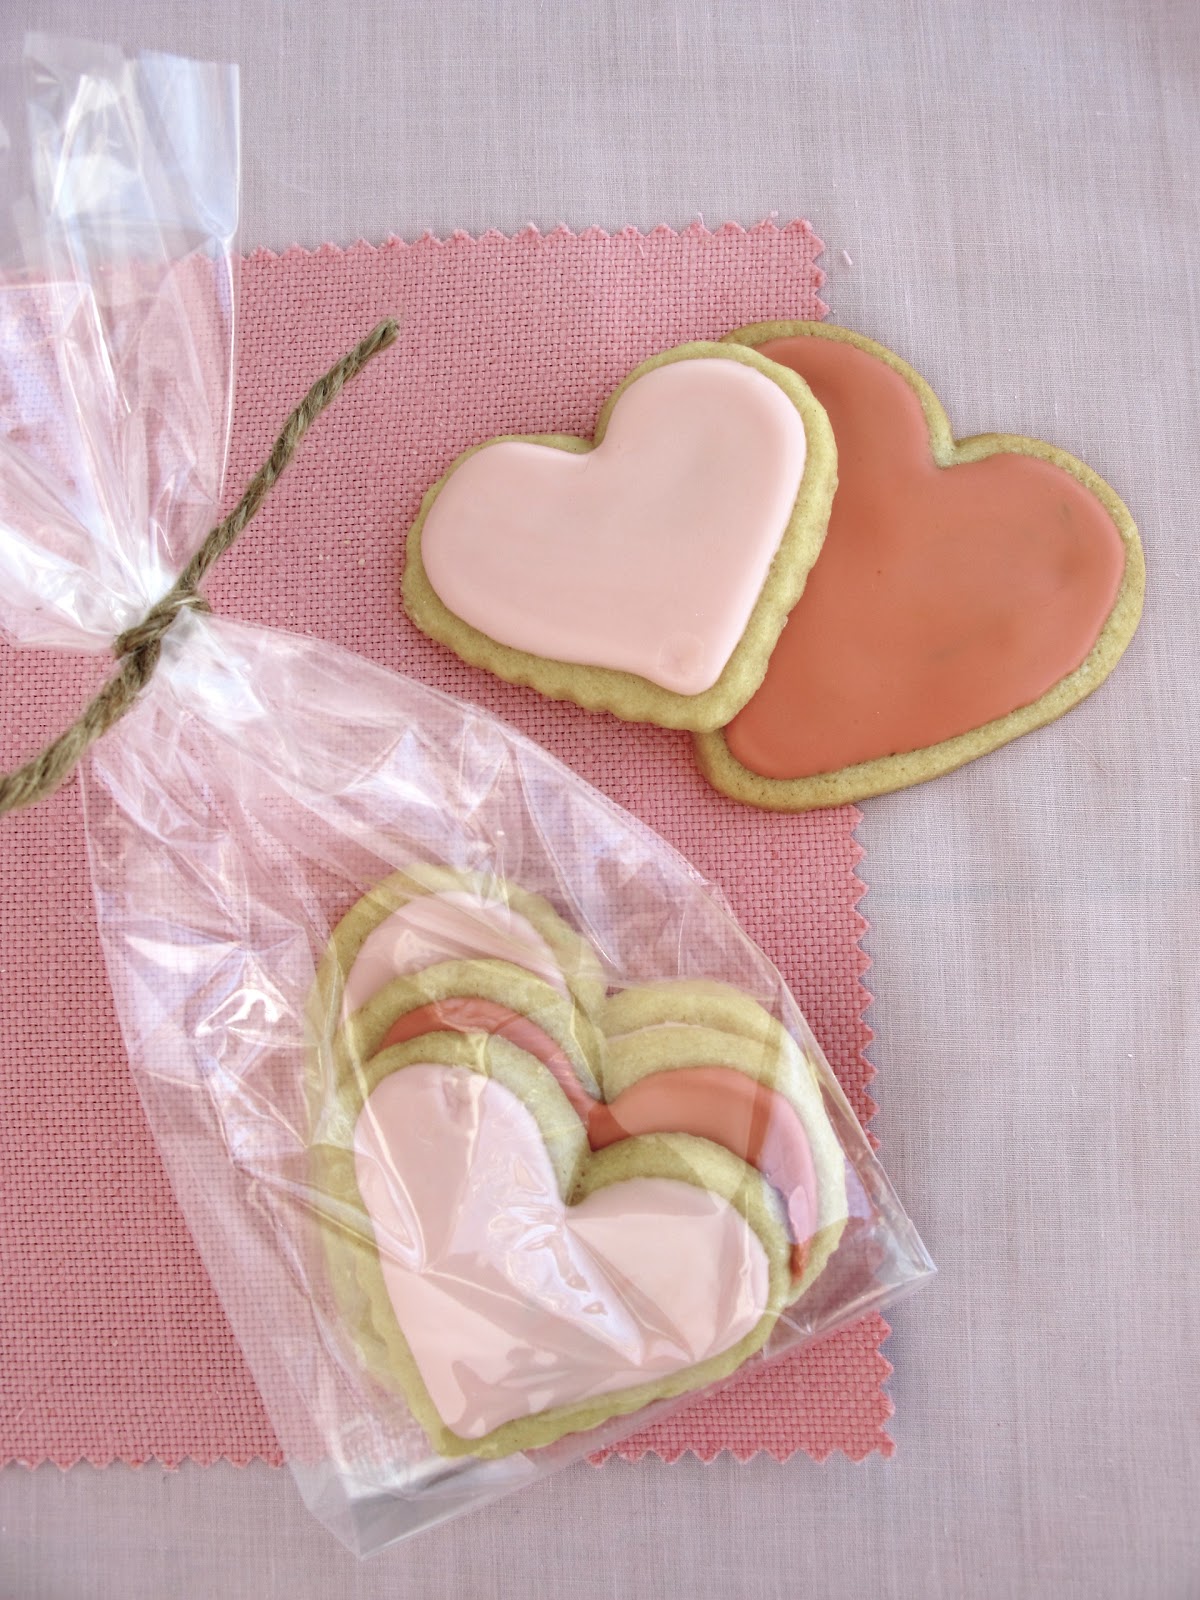 Jenny Steffens Hobick: Valentine's Day Sugar Cookies | Heart Sugar ...